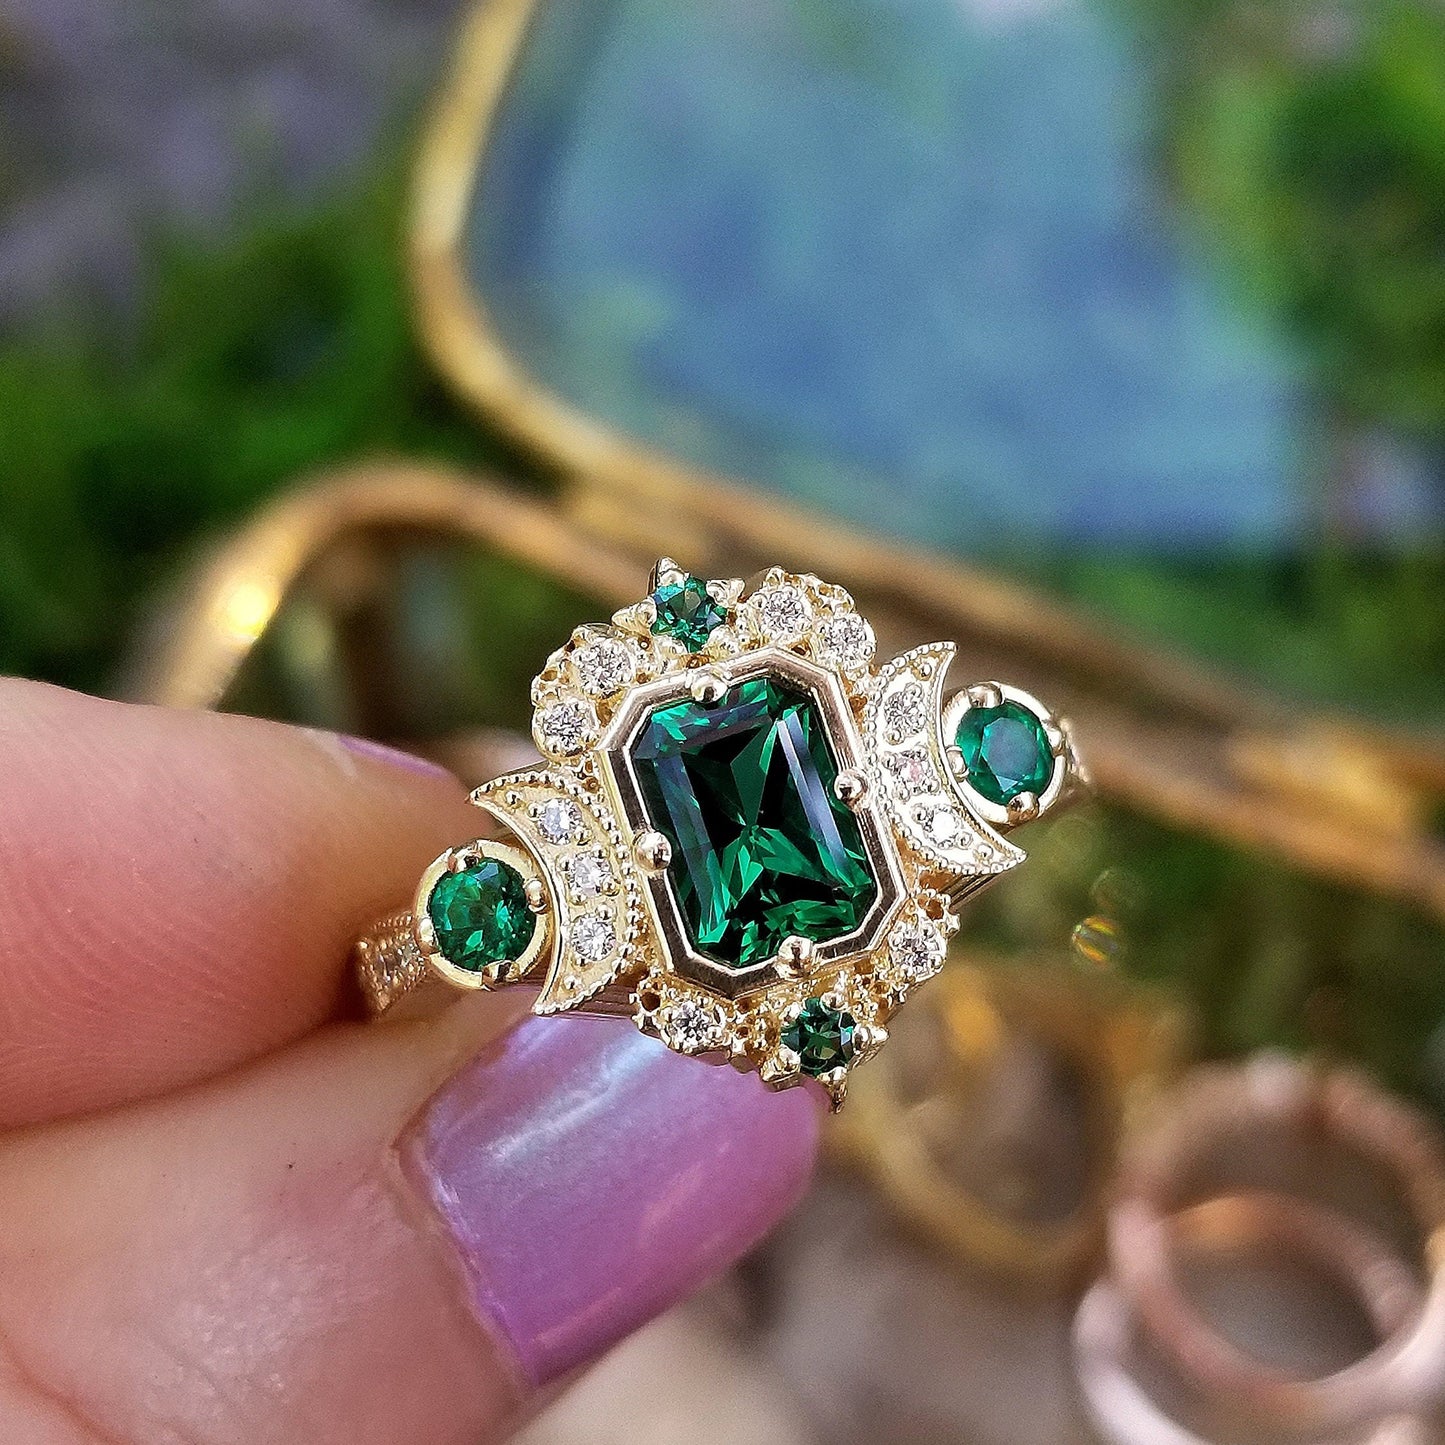 Ready to Ship Size 8 - 9.5 - Chatham Emerald Selene Diamond Crescent Moon Engagement Ring - Emerald Cut Emerald - 14k Yellow Gold